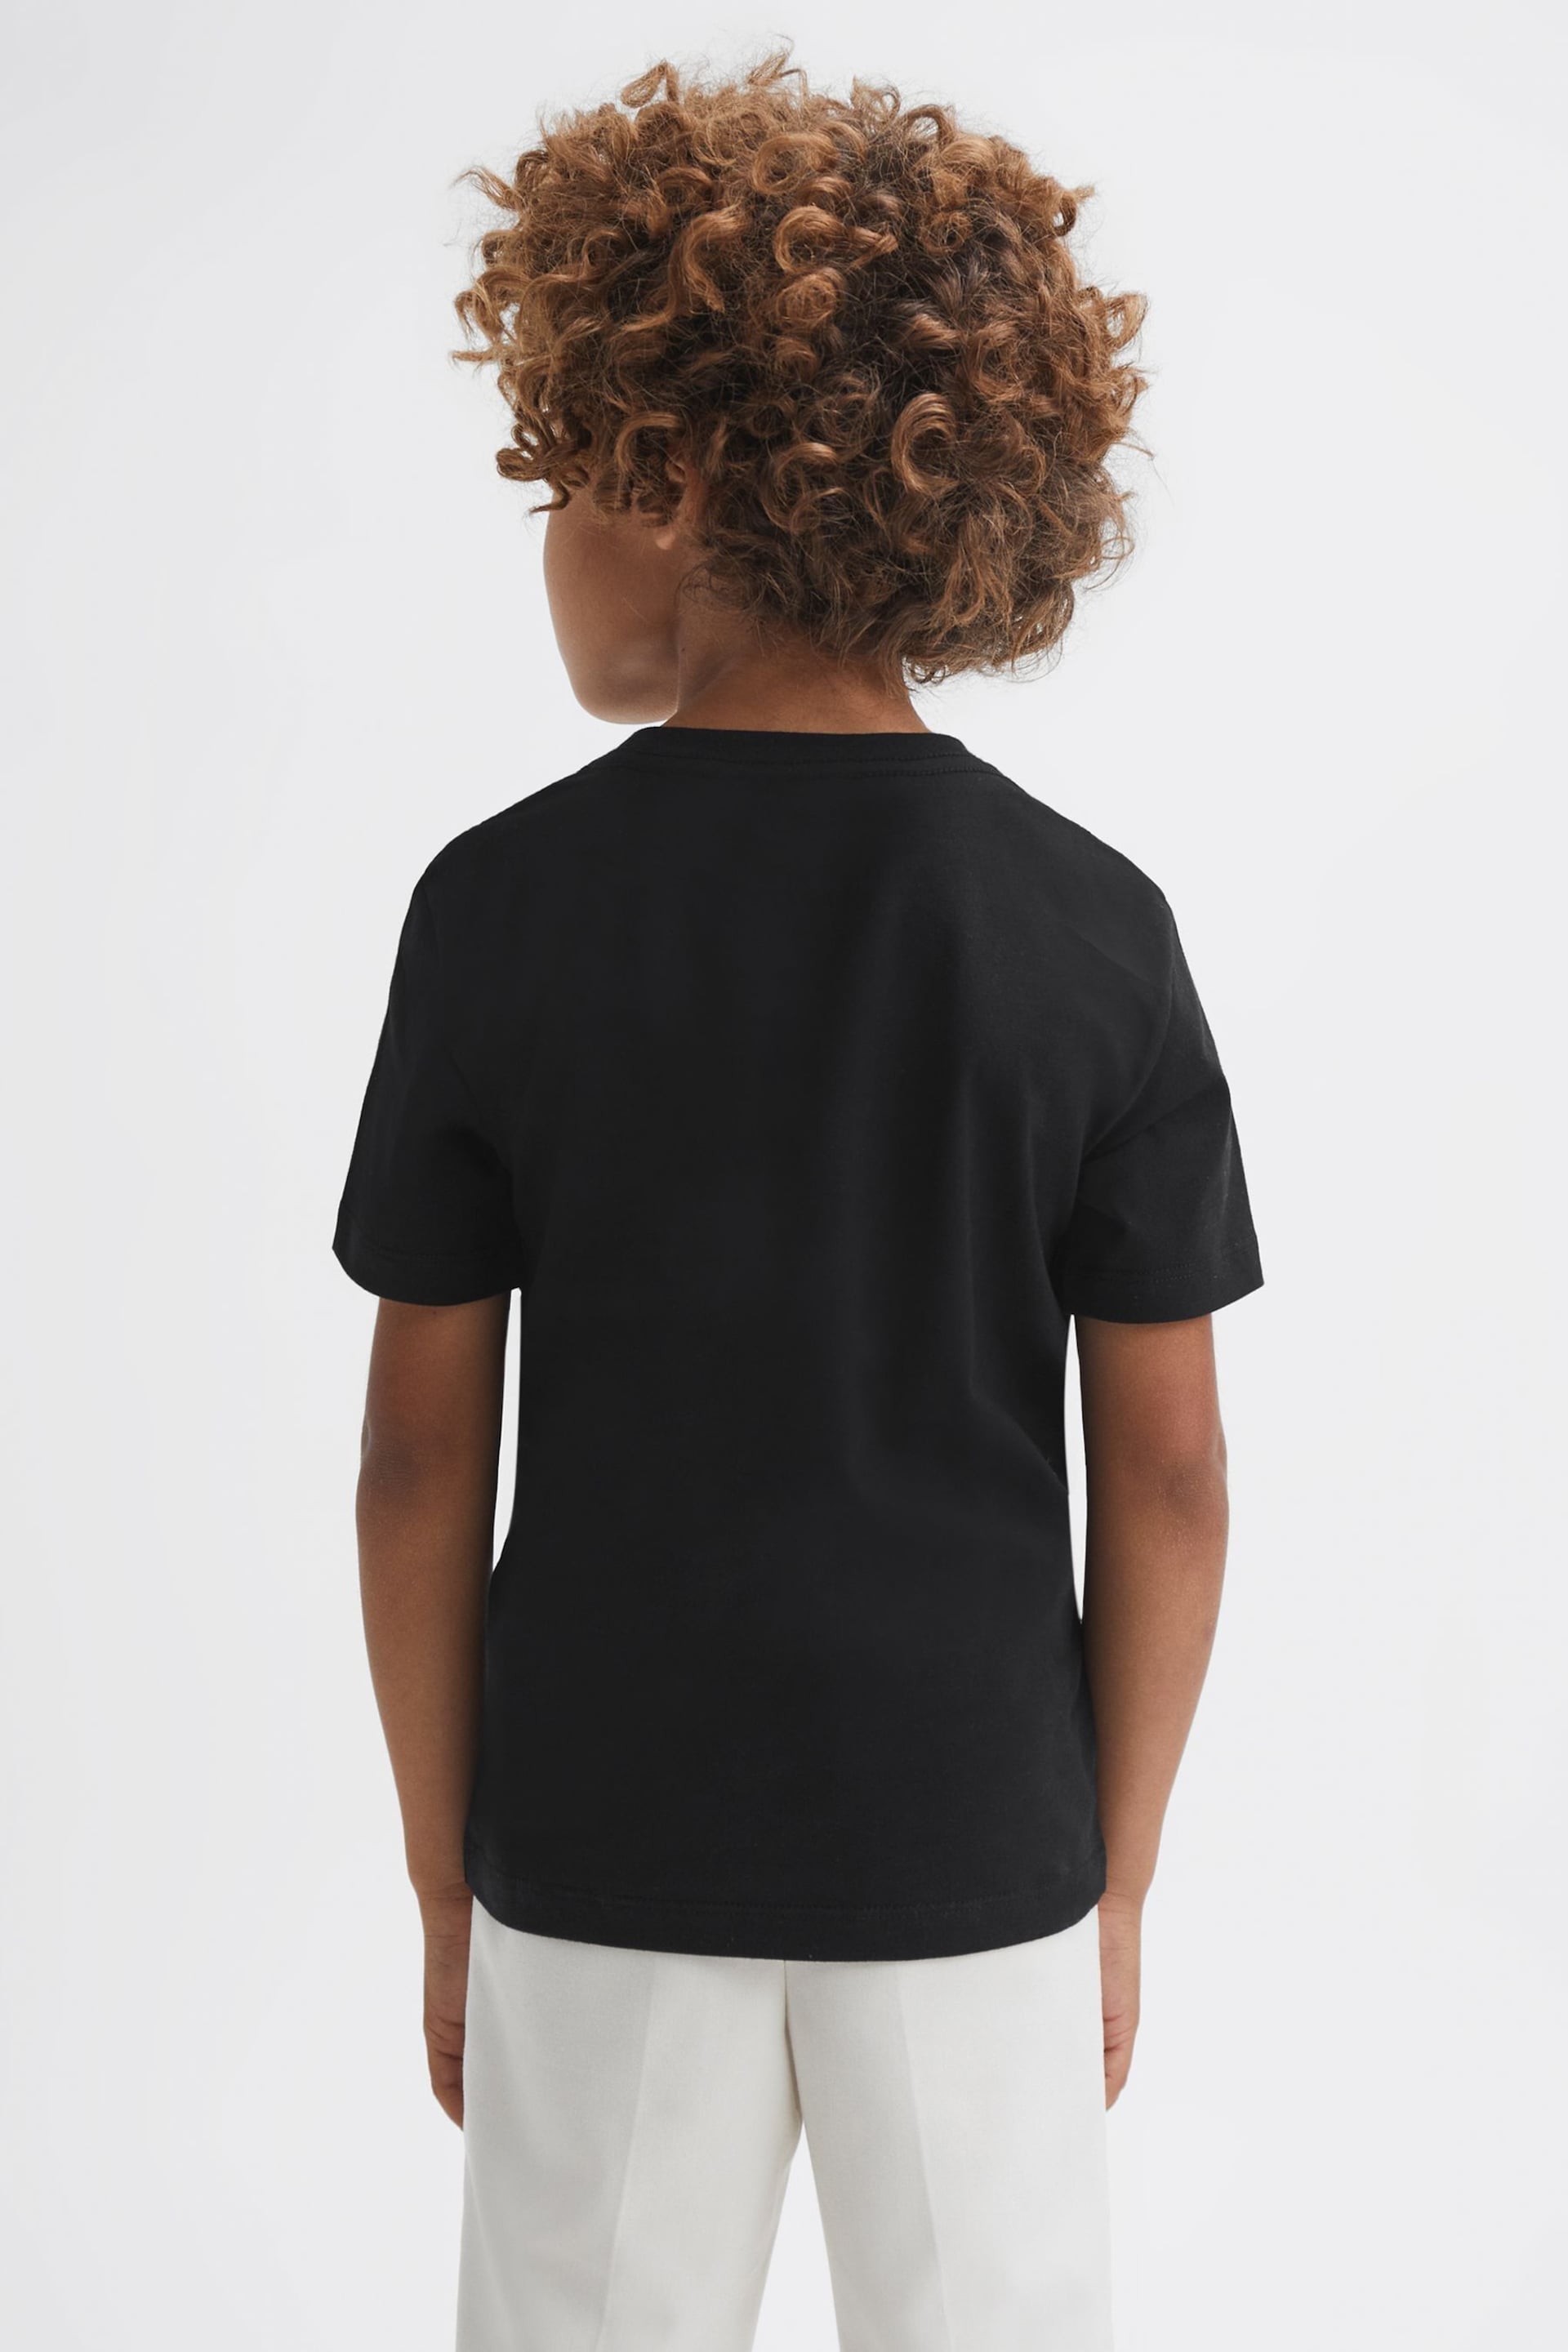 Reiss Black Bless Junior Crew Neck T-Shirt - Image 4 of 4